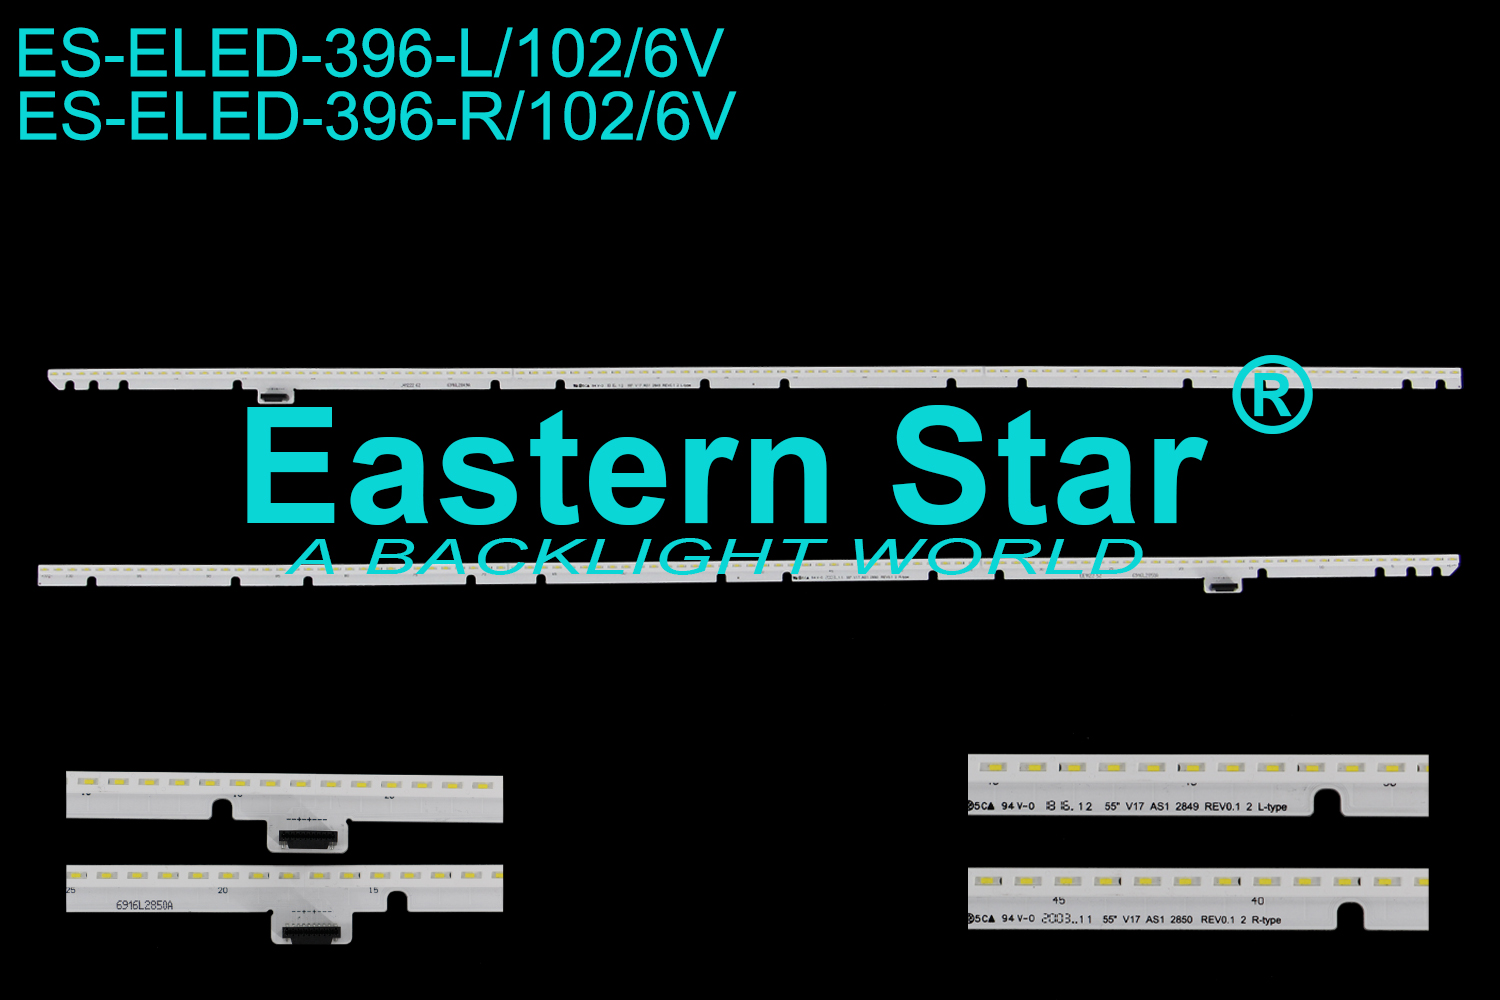 ES-ELED-396 ELED/EDGE TV backlight use for 55'' Lg 55" V17 AS1 2849 REV0.1 2 L-type 55" V17 AS1 2850 REV0.1 2 R-type LED STRIPS(2)